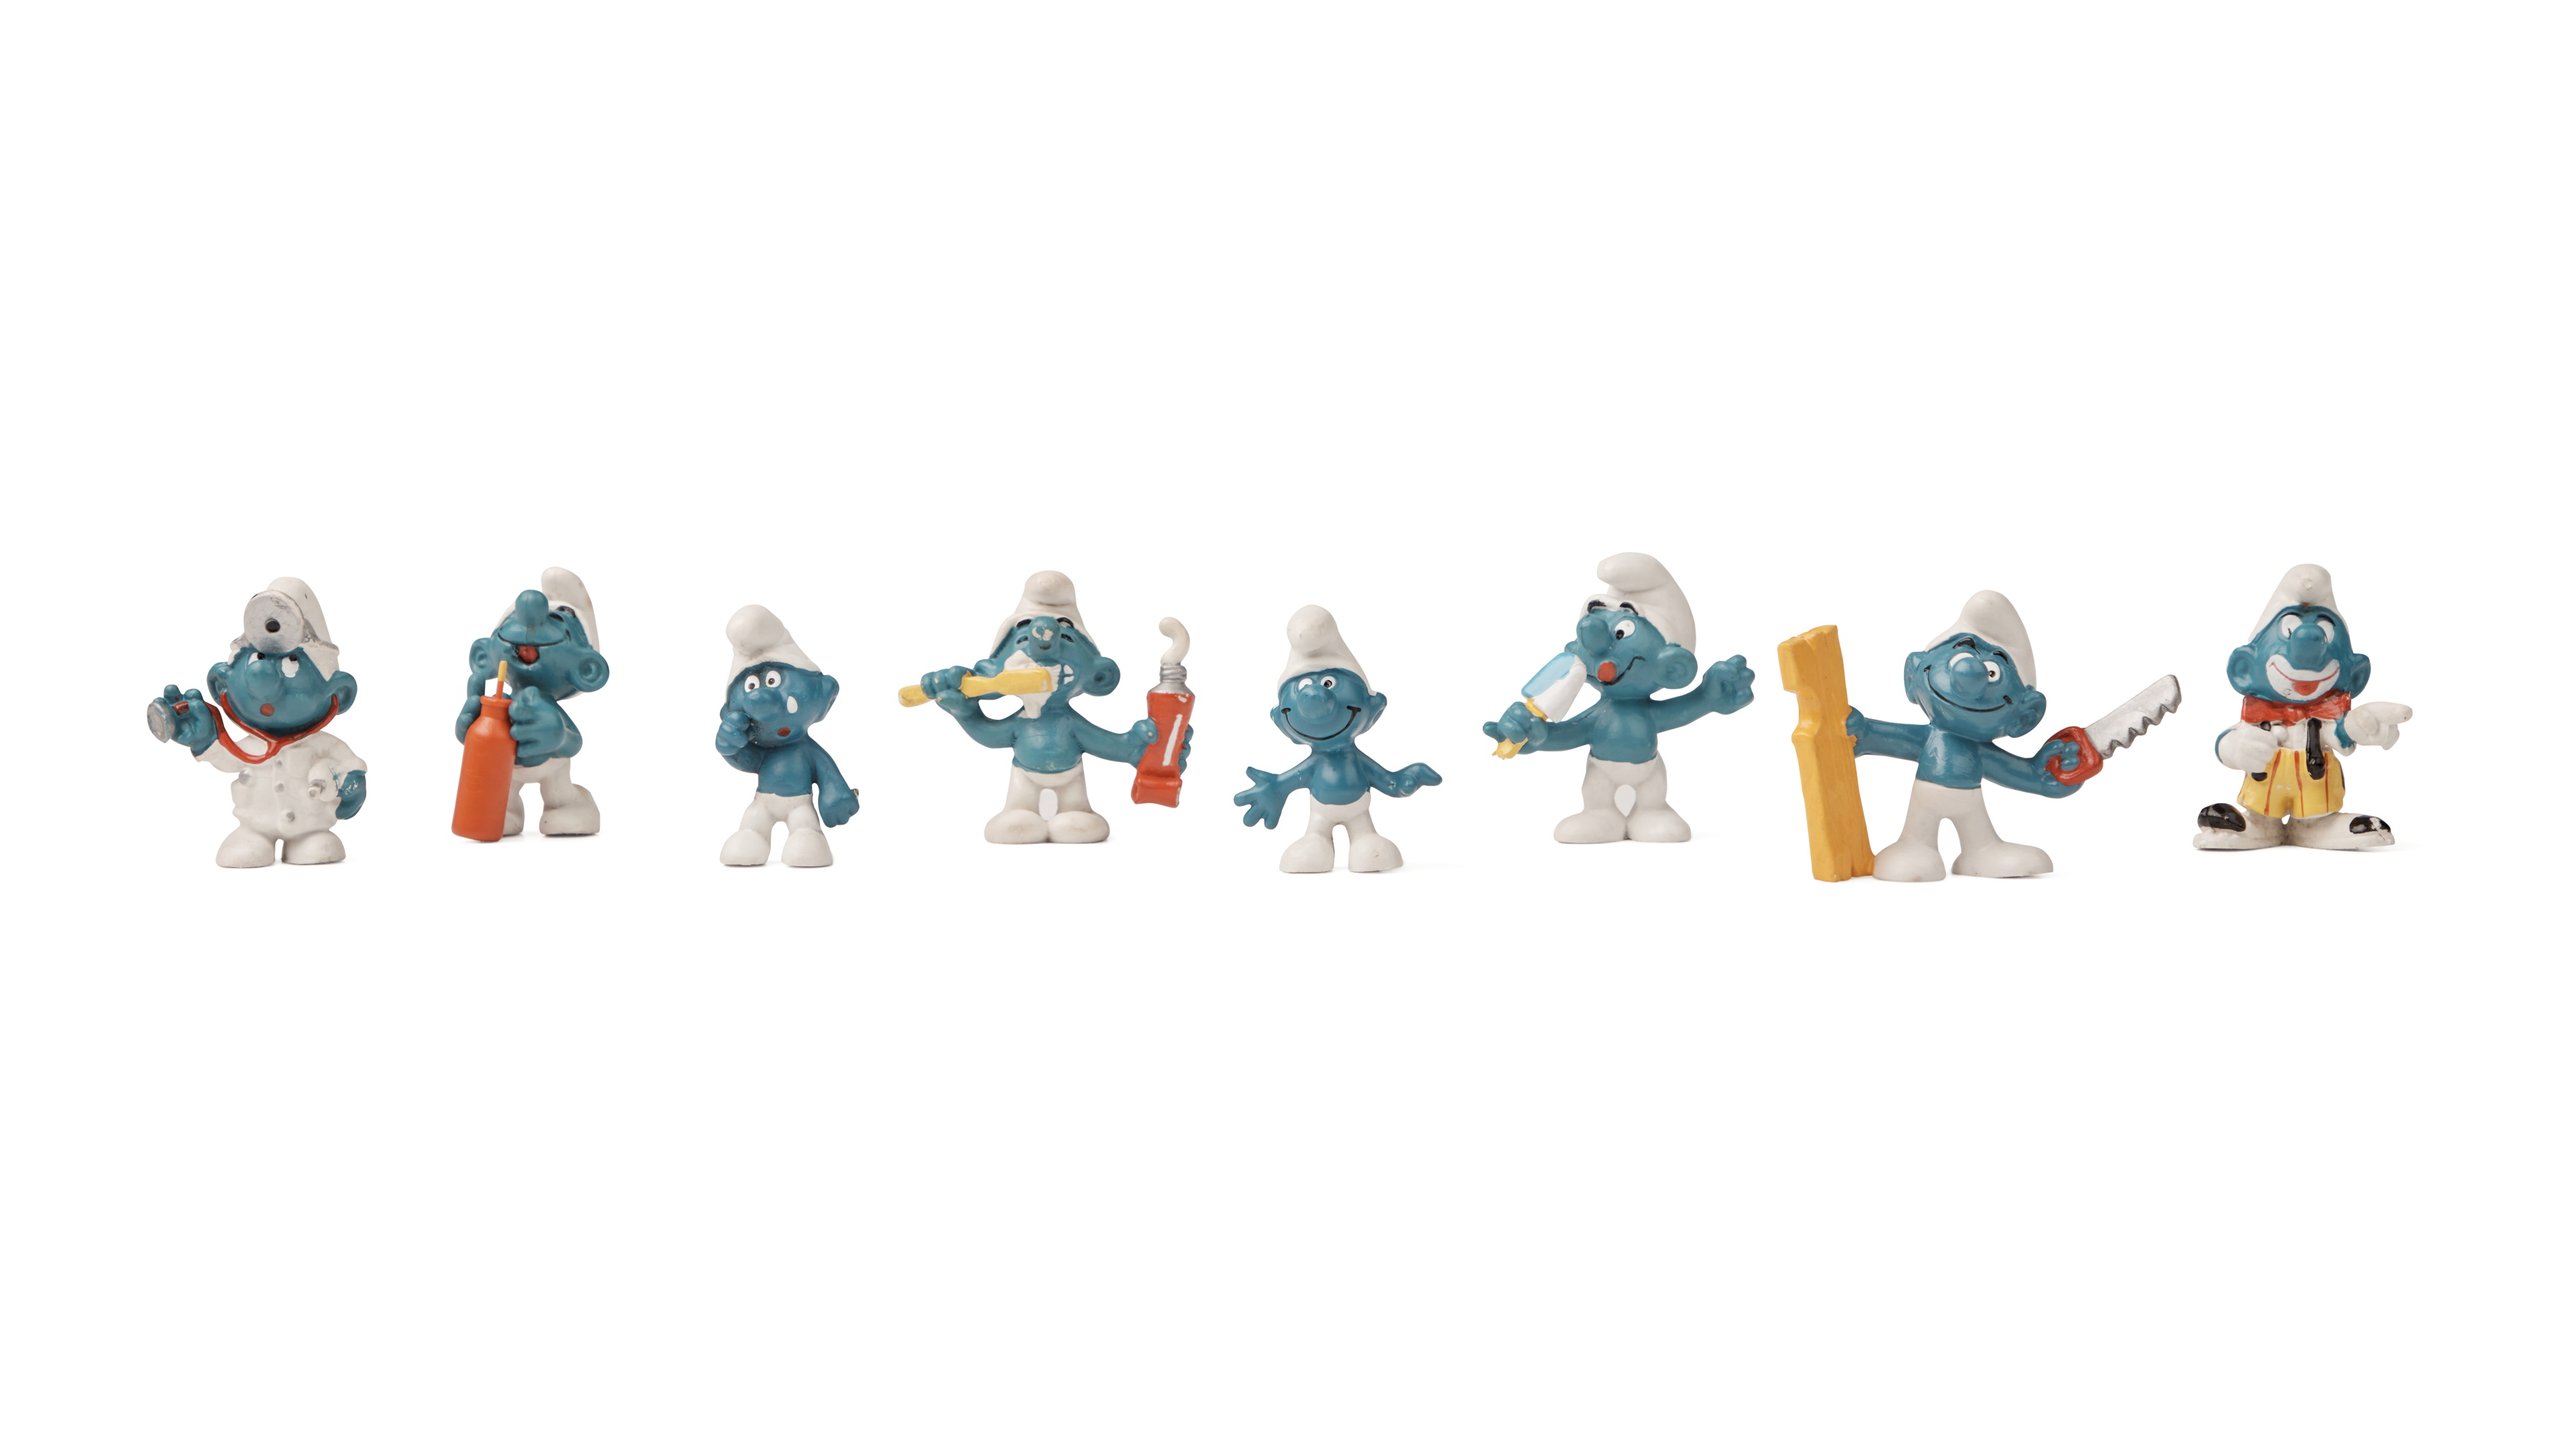 Smurf figures